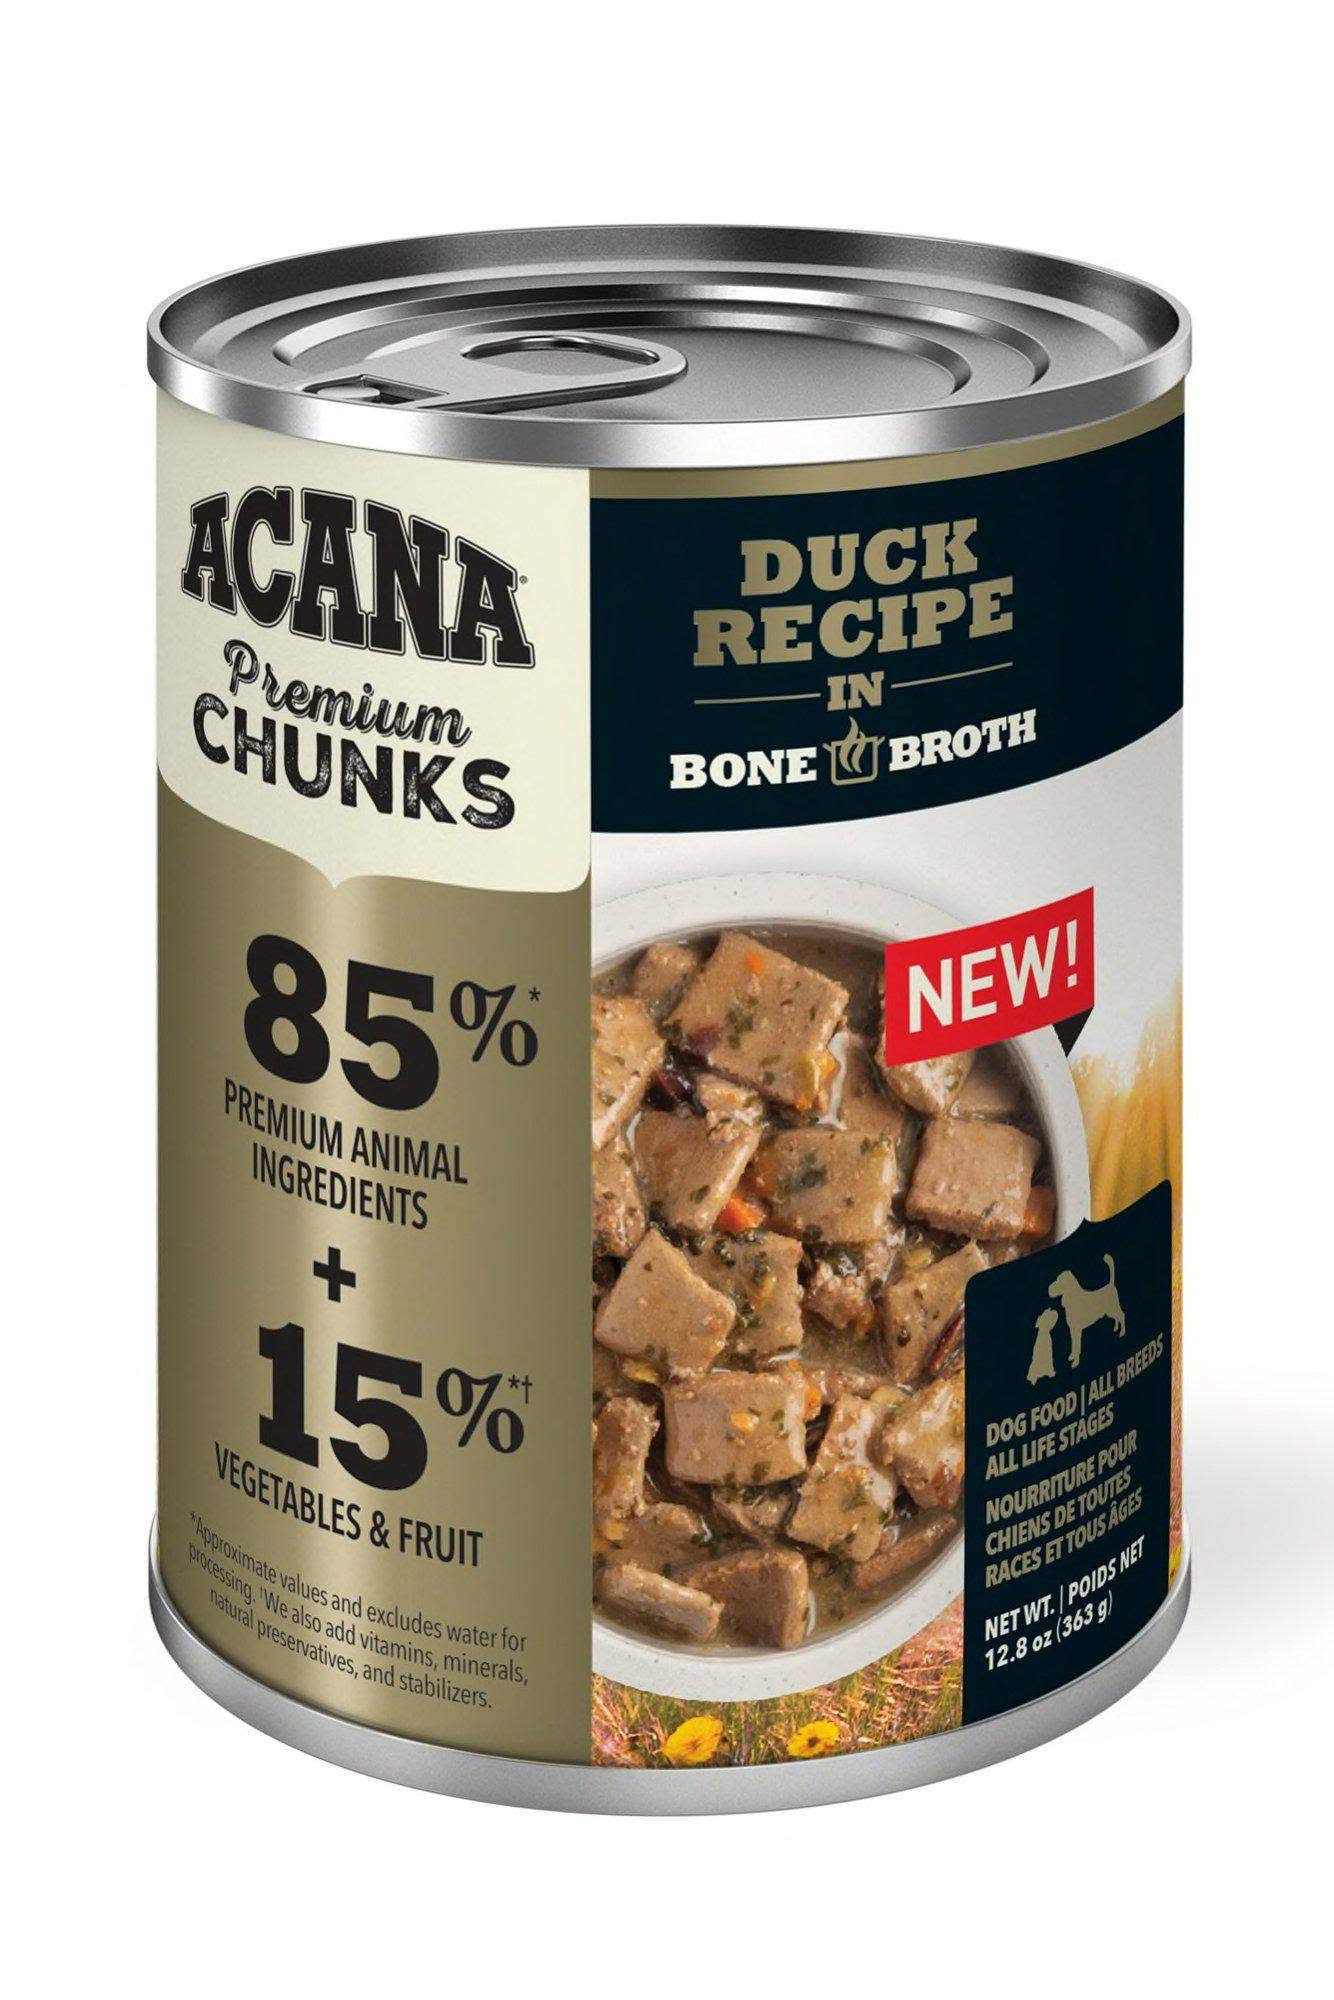 ACANA Premium Chunks Duck Recipe in Bone Broth Dog Food, 12.8-oz